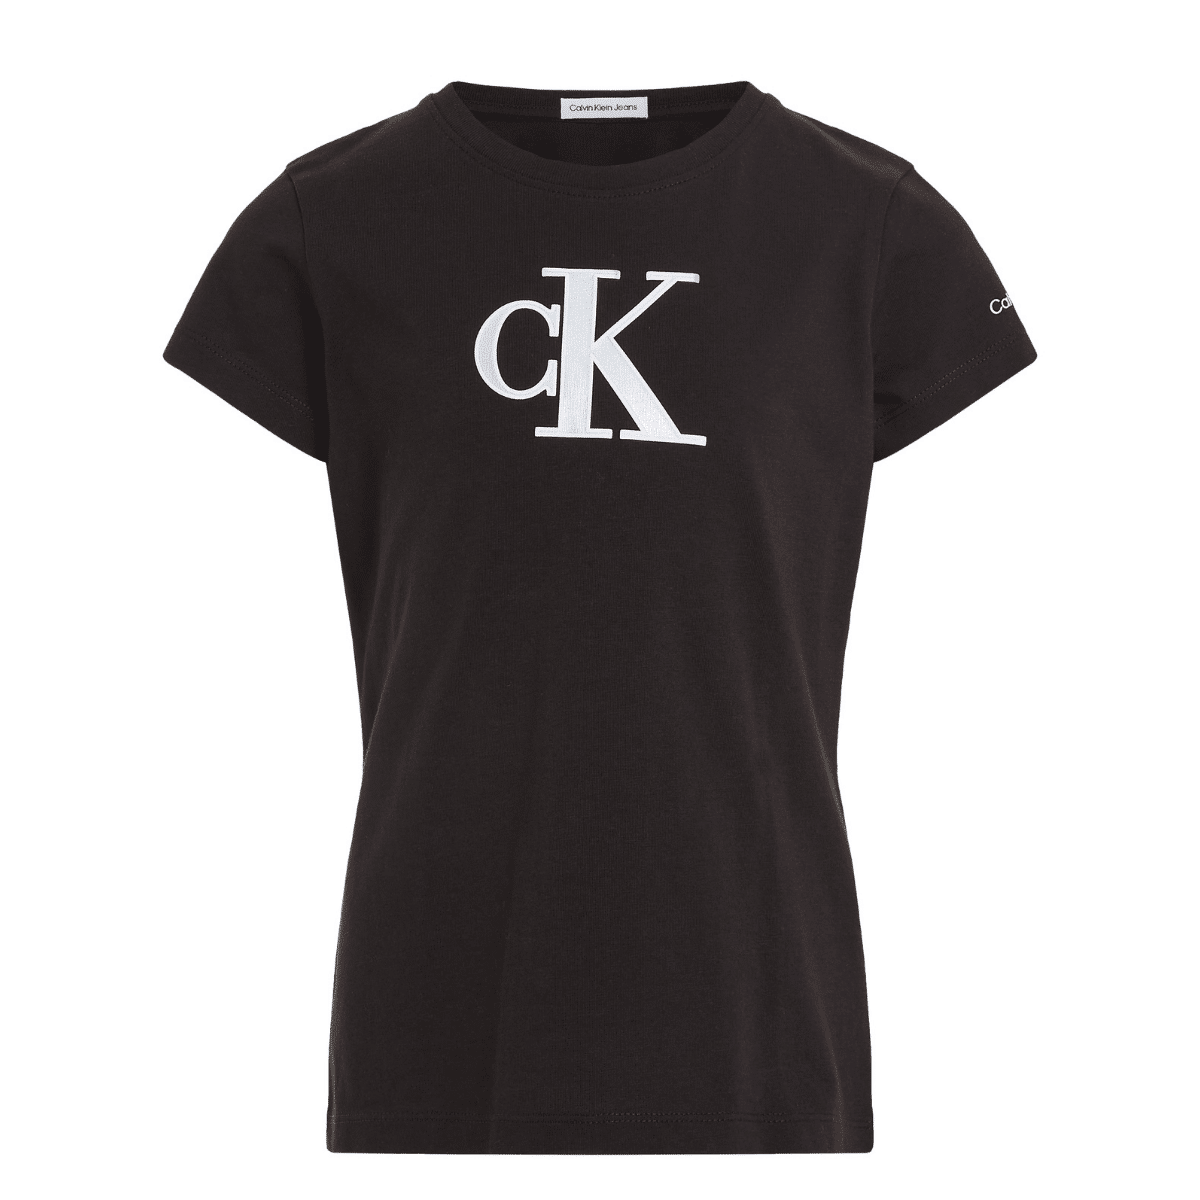 calvin klein girls black tshirt with large logo white background